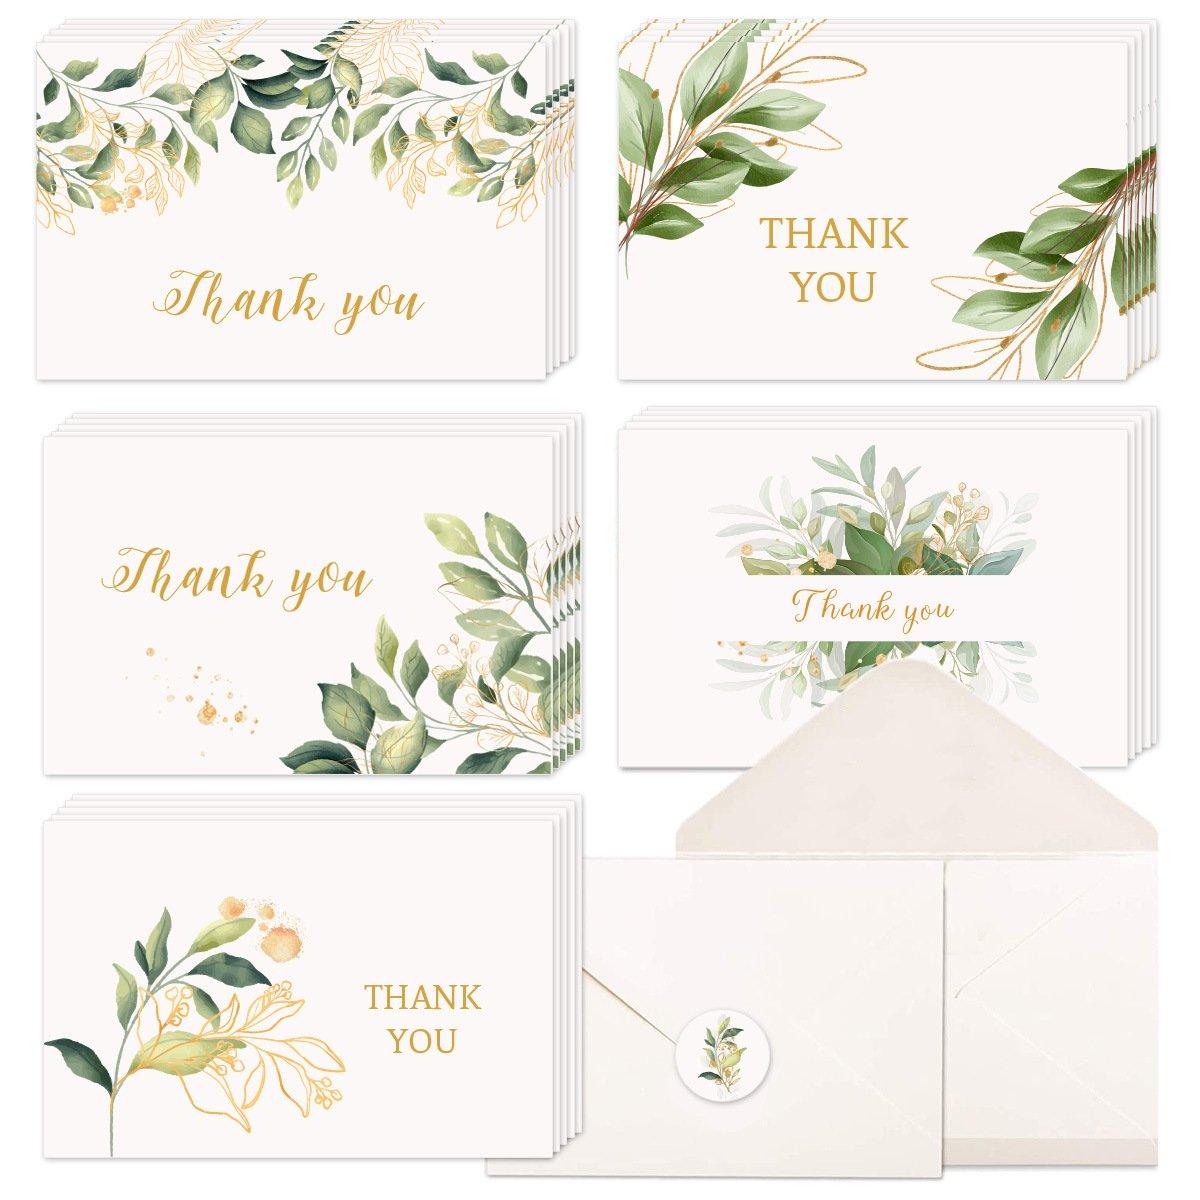 Thank You Cards With Envelopes 48 Bulk - Wedding Thank You Cards with Envelopes 6 Design 4 X 6 Inch - Lasercutwraps Shop